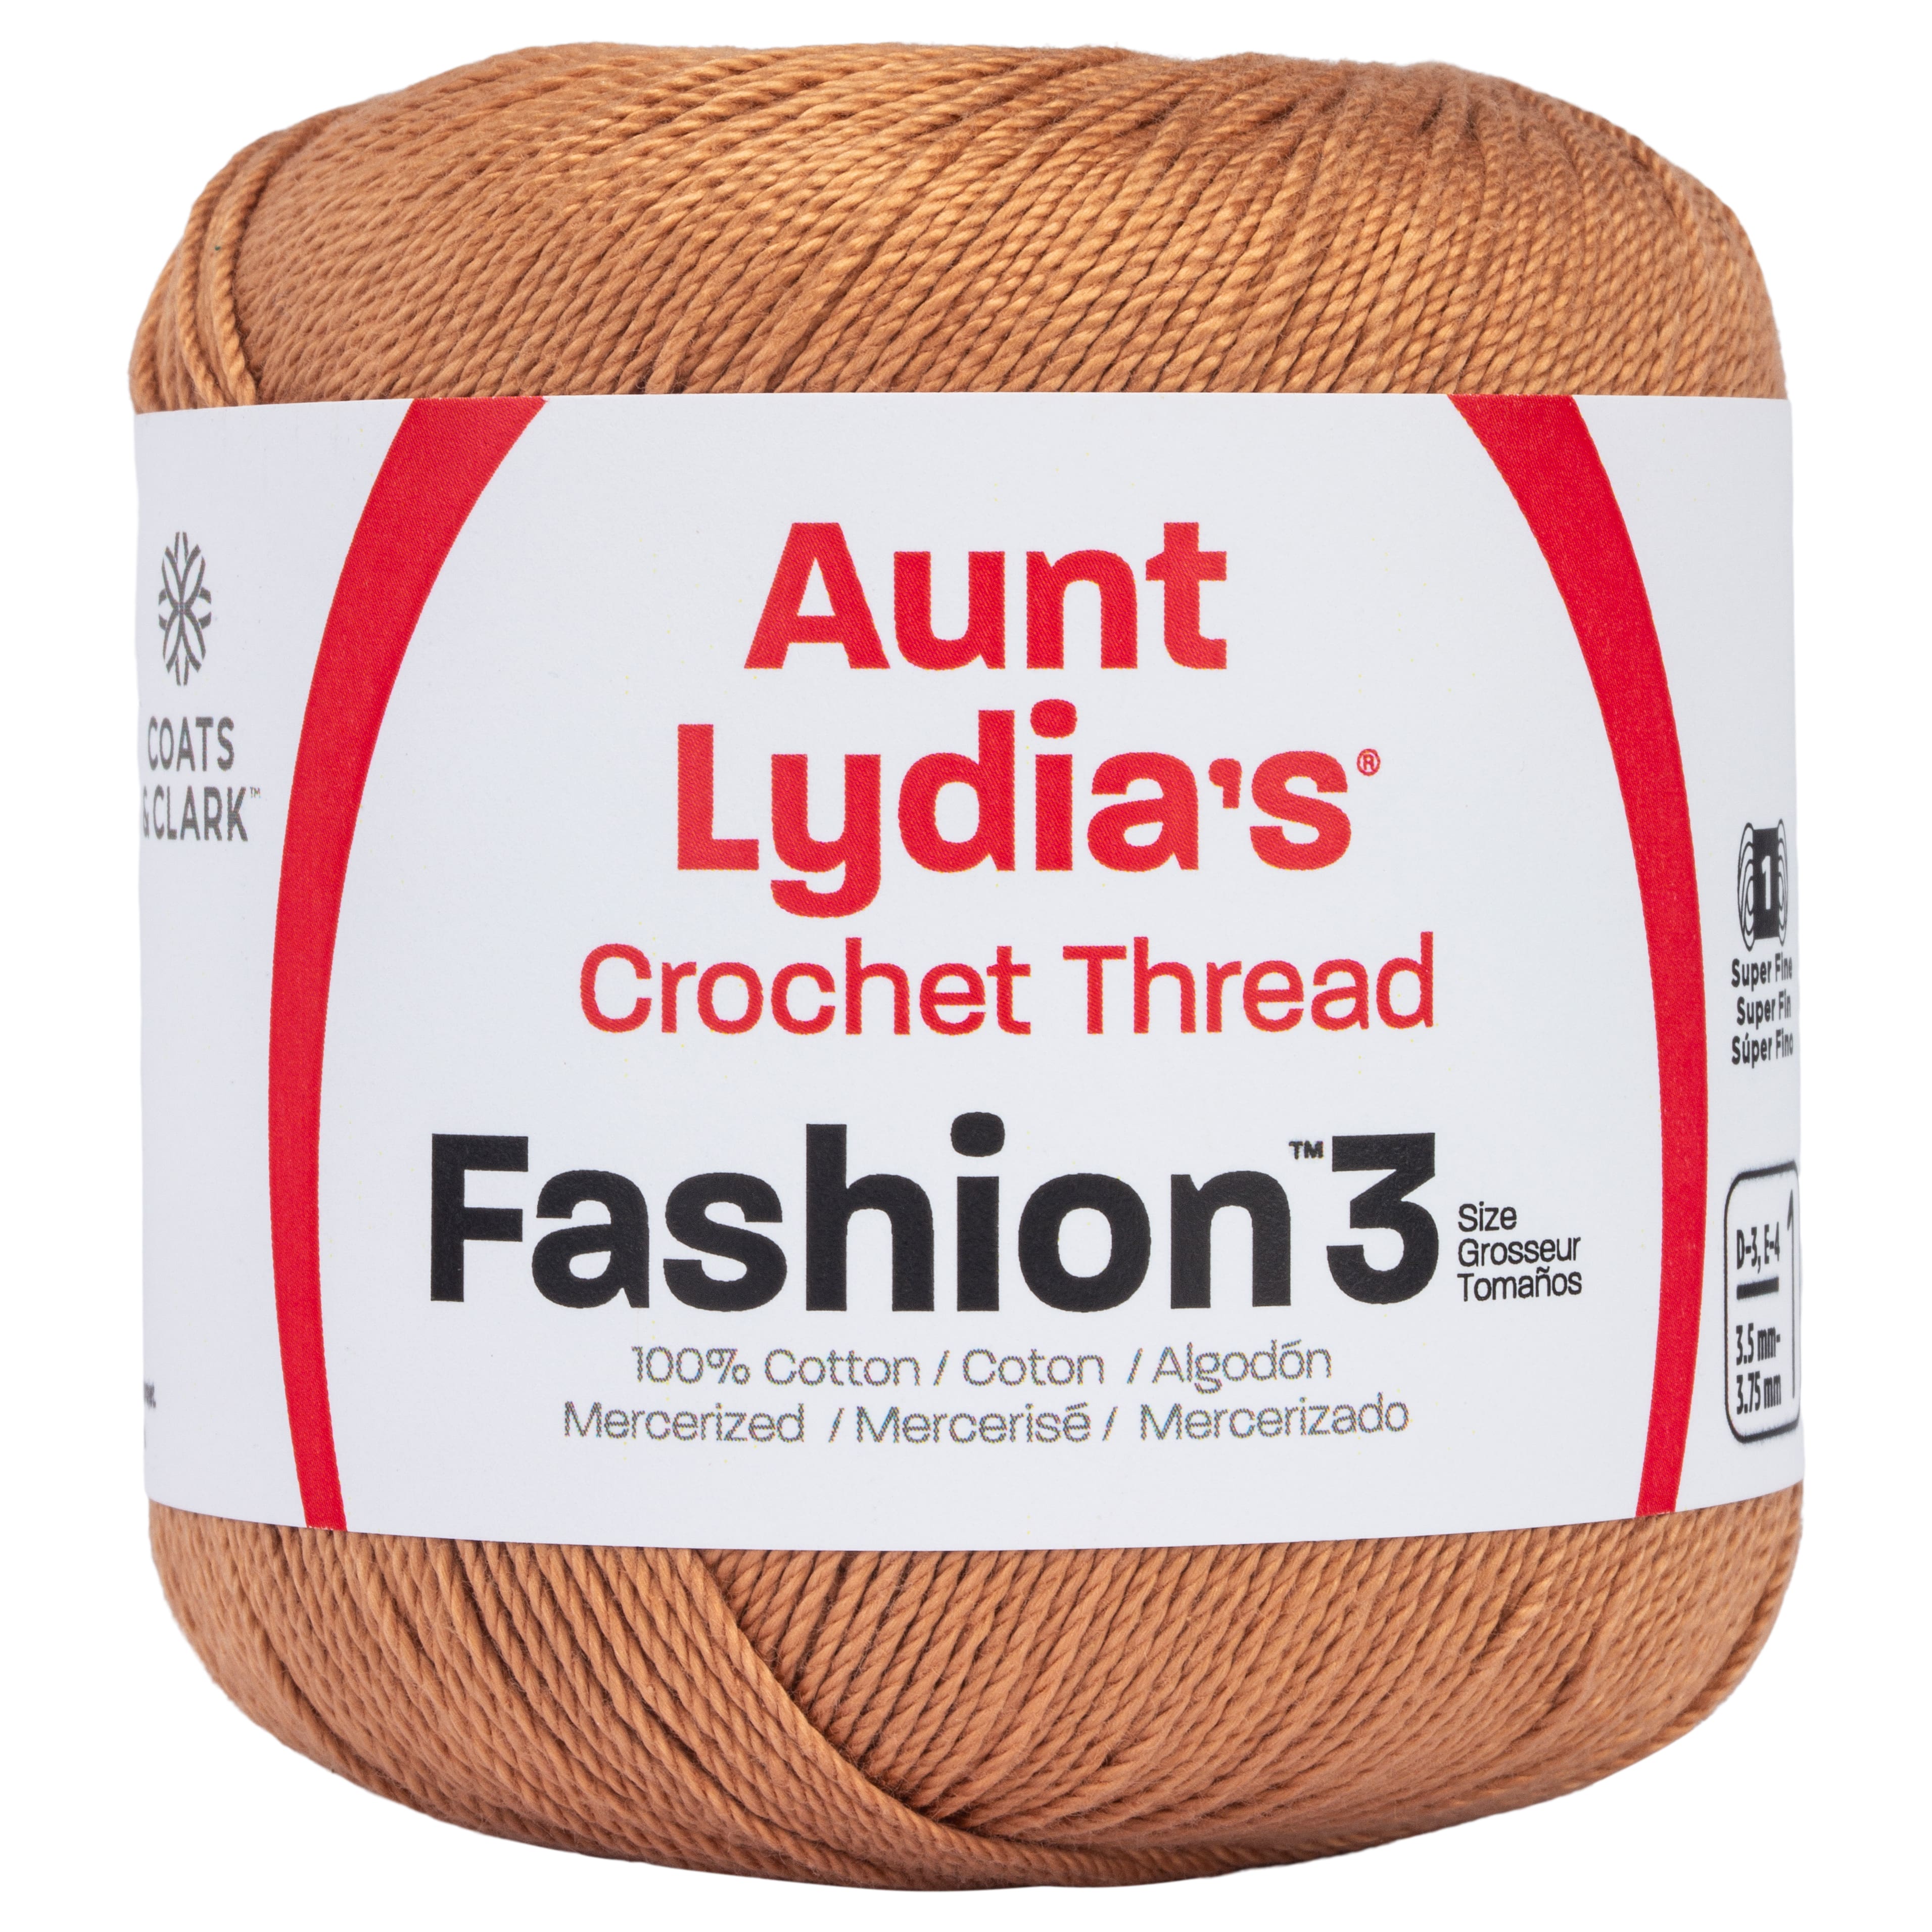 Jupean Crochet Hook, Extra Long Knitting Needles for Beginners and